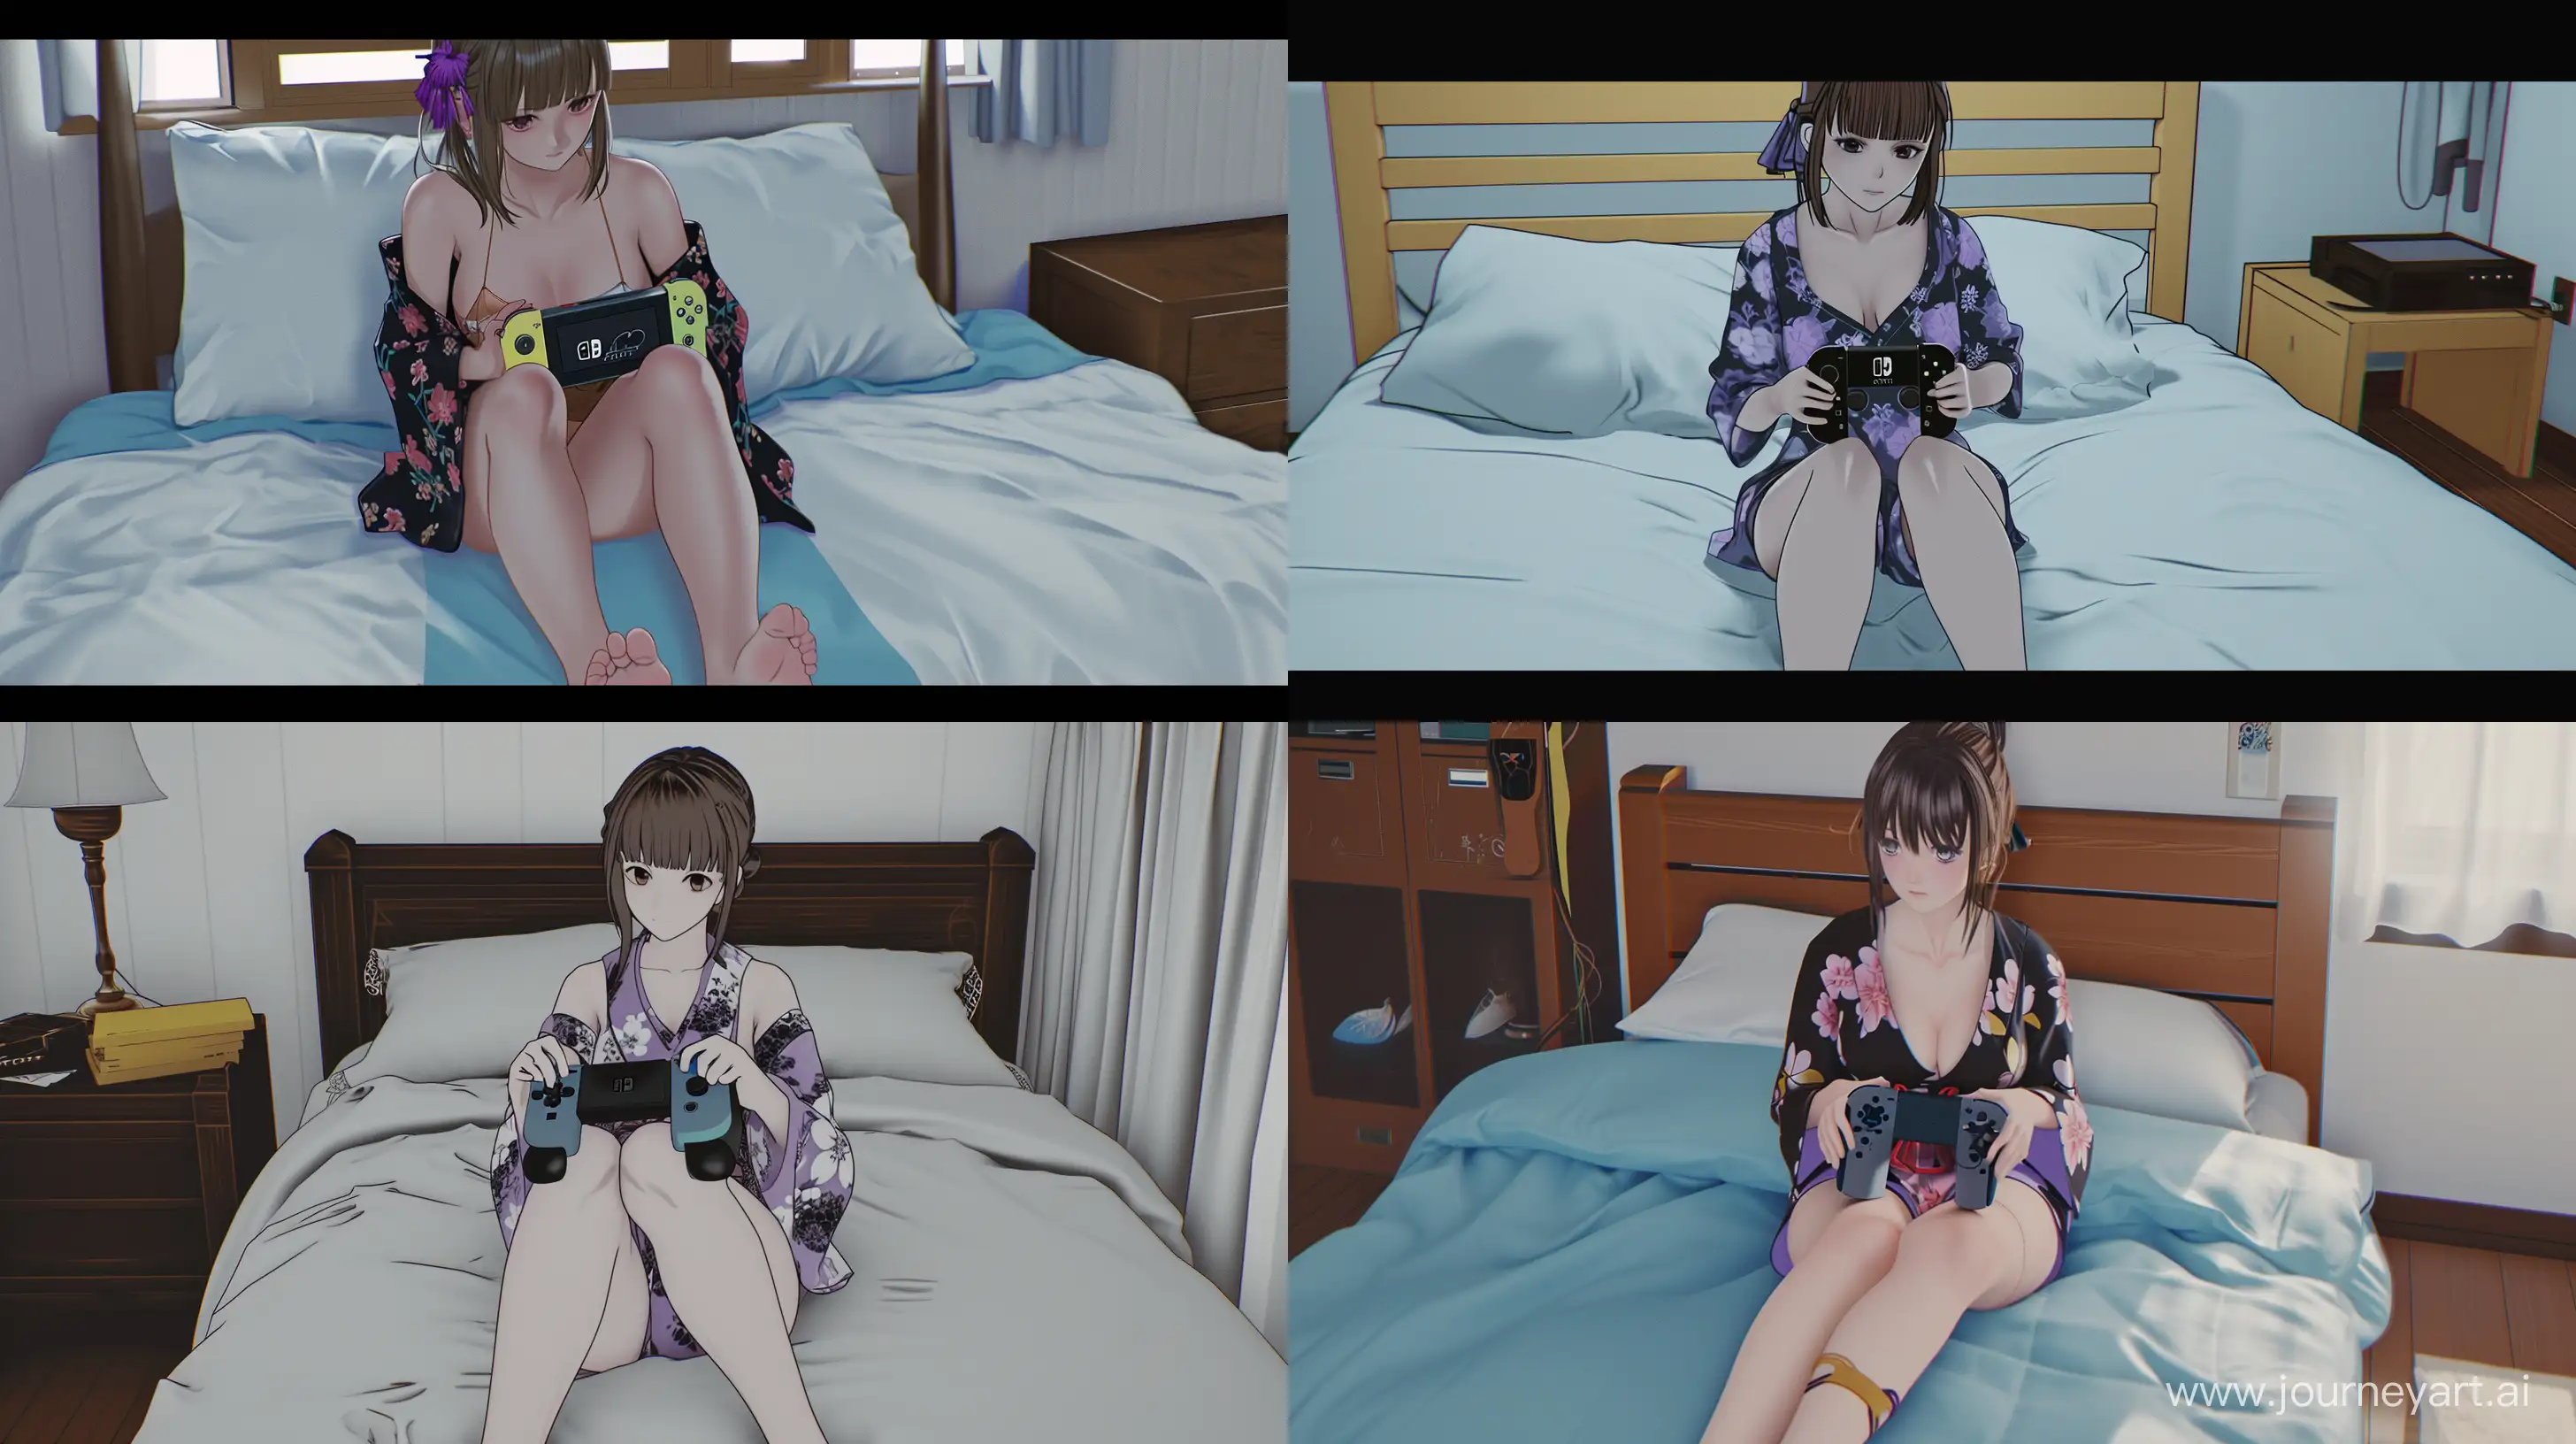 AnimeStyle-Girl-in-Mini-Kimono-Enjoying-Switch-Console-Gaming